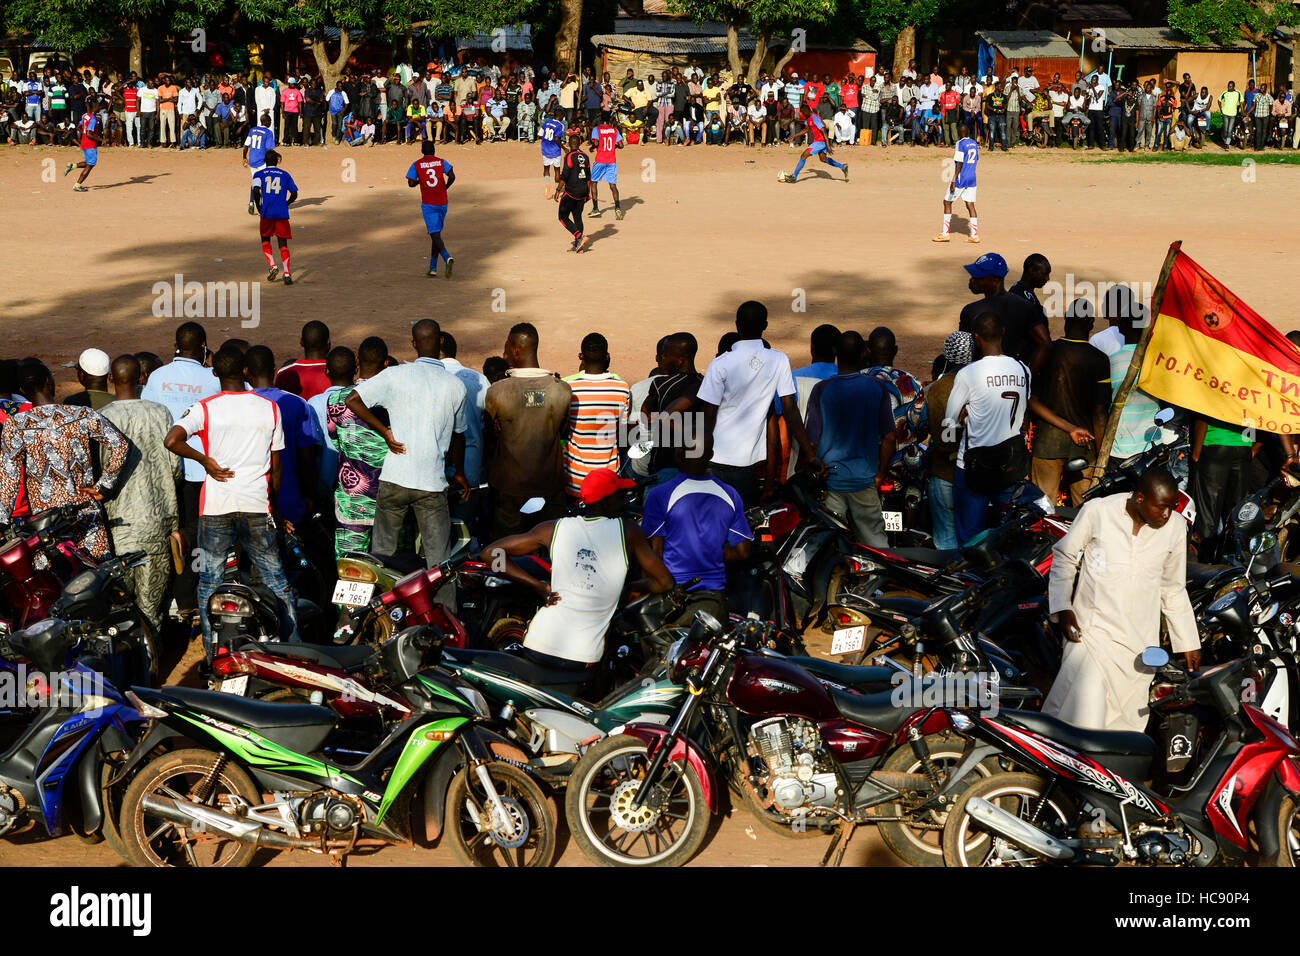 BURKINA FASO, Bobo Dioulasso, soccer match / Jugendliche beim Fussballspiel Stock Photo